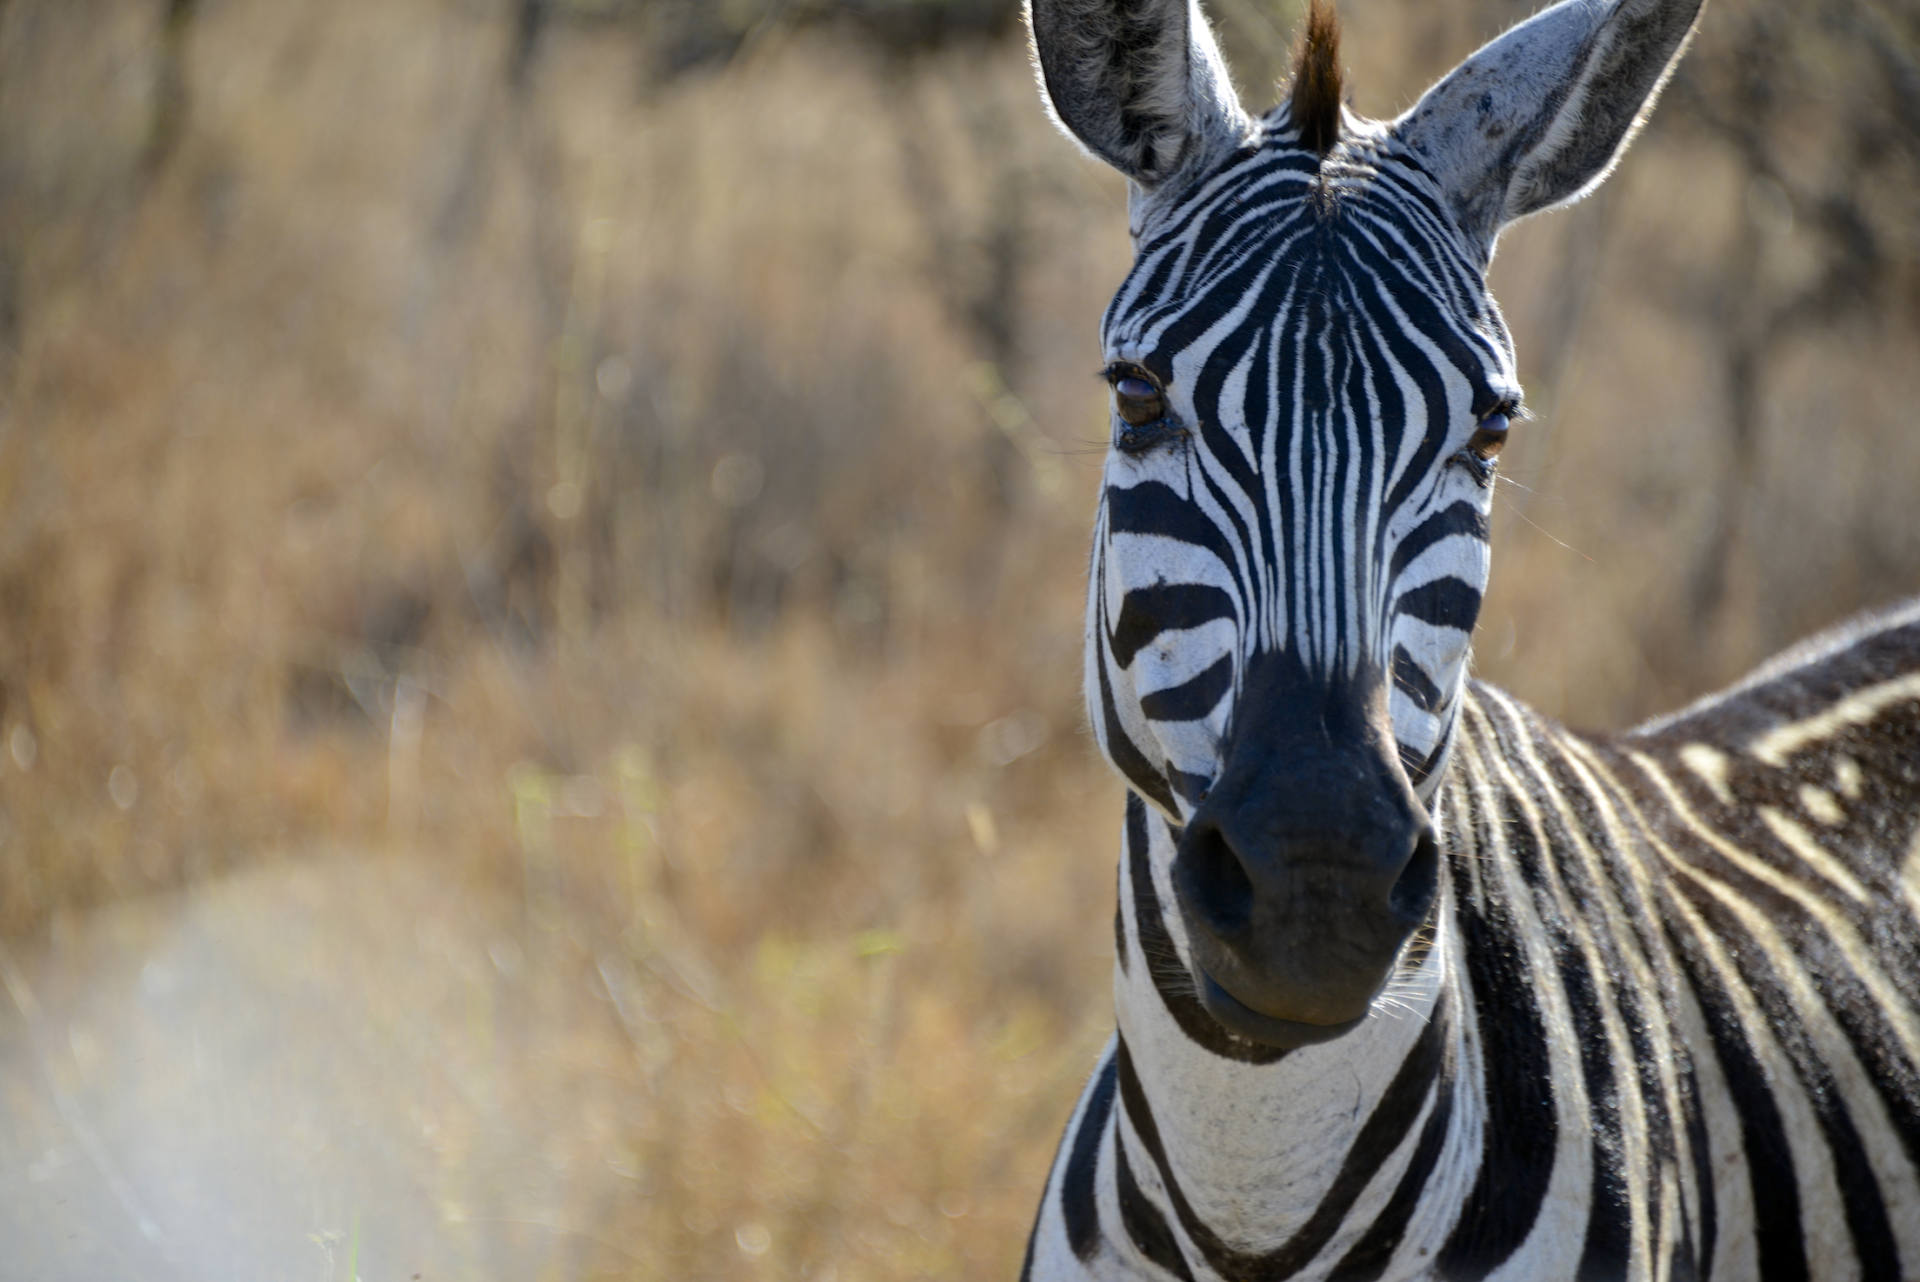 Africa: Kenya: A Zebra pauses to eat in Nairobi National Park